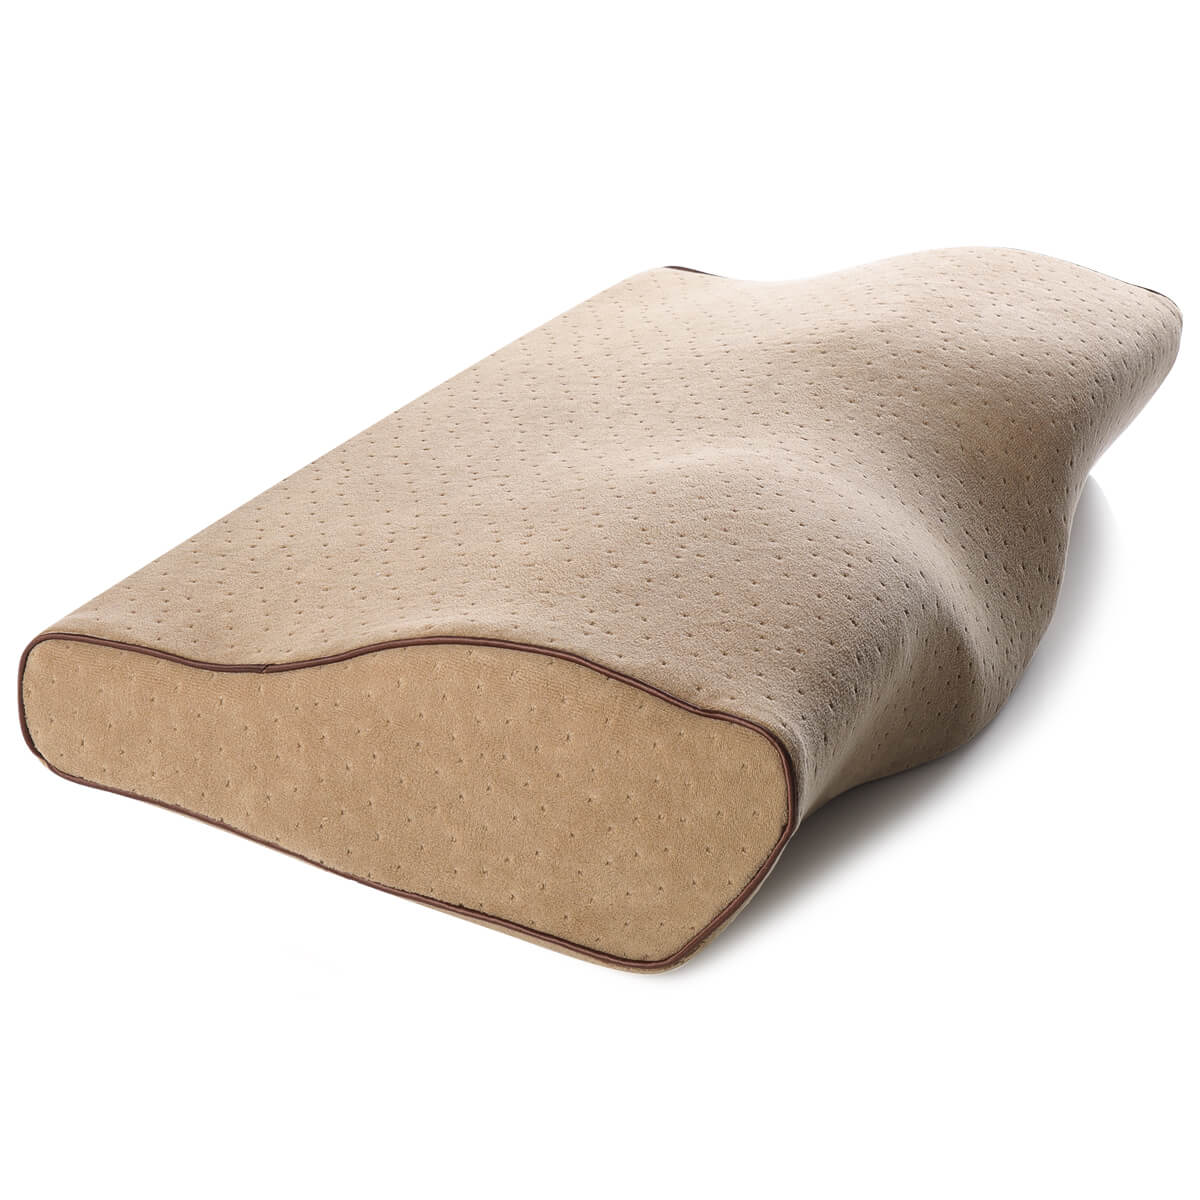 Orthopedic Memory Foam Pillow - BCBMALL